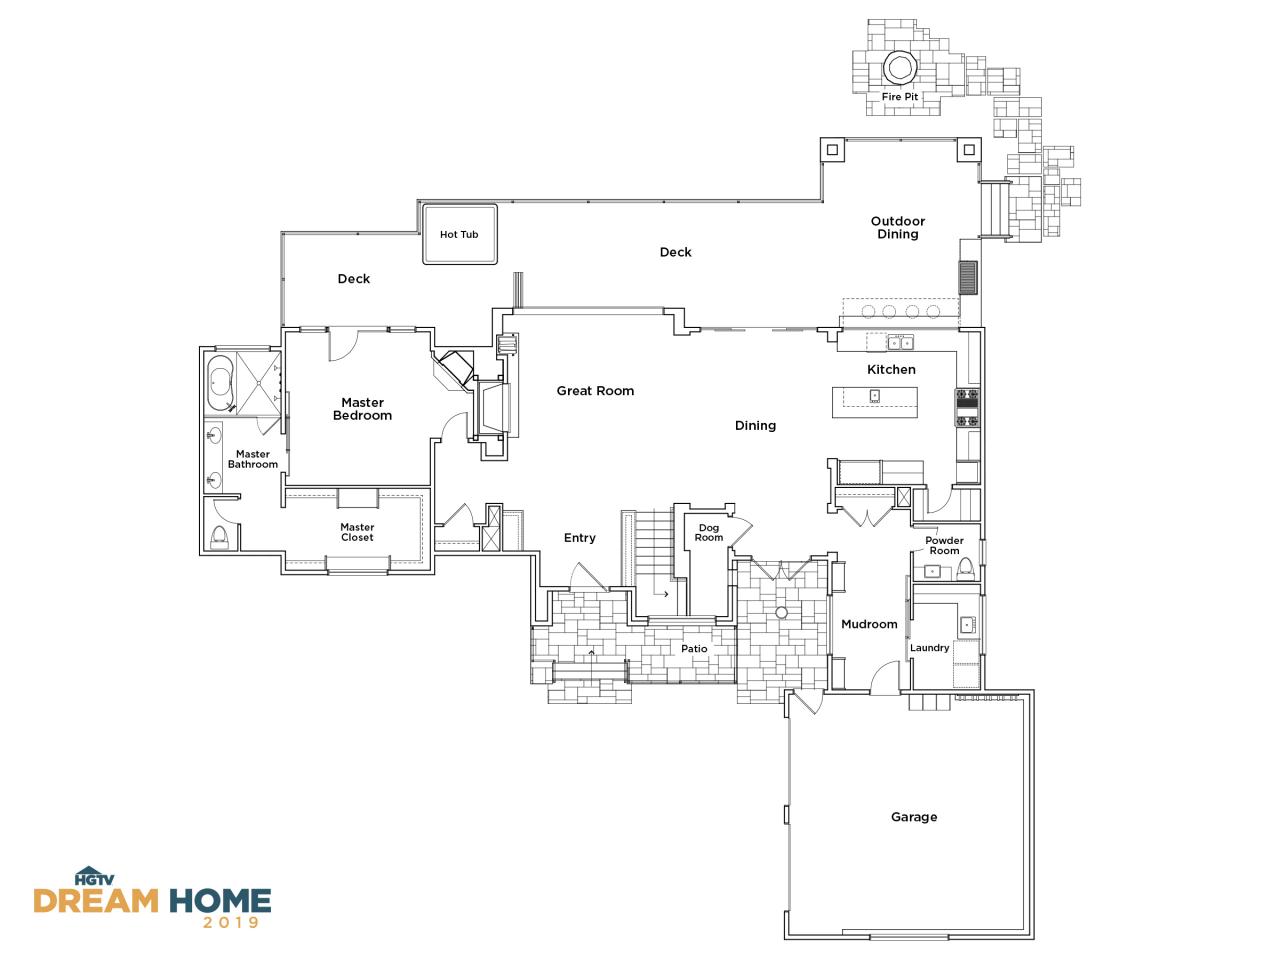 Hgtv 2020 Dream Home Floor Plan floorplans.click